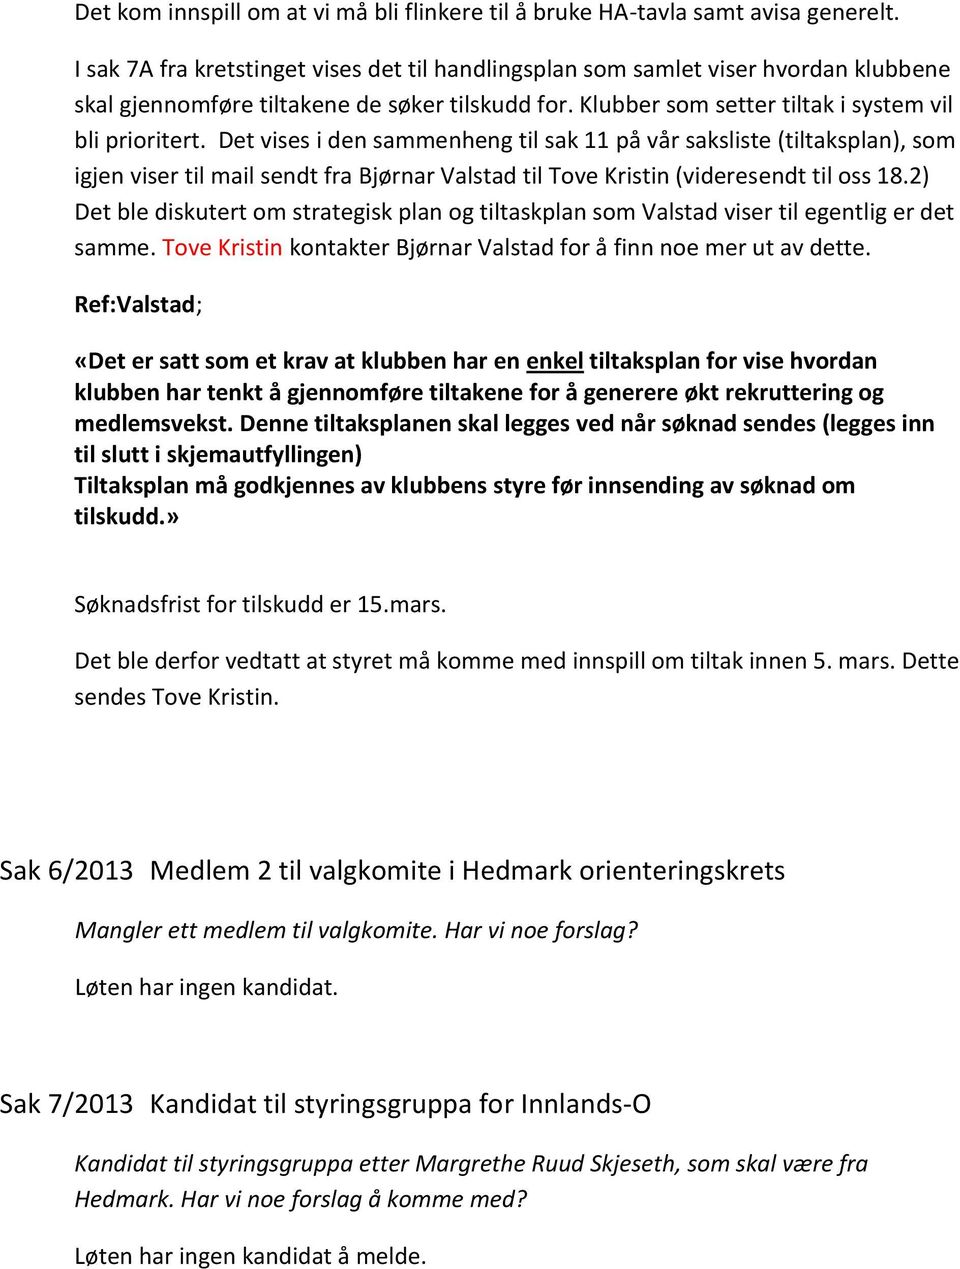 Det vises i den sammenheng til sak 11 på vår saksliste (tiltaksplan), som igjen viser til mail sendt fra Bjørnar Valstad til Tove Kristin (videresendt til oss 18.